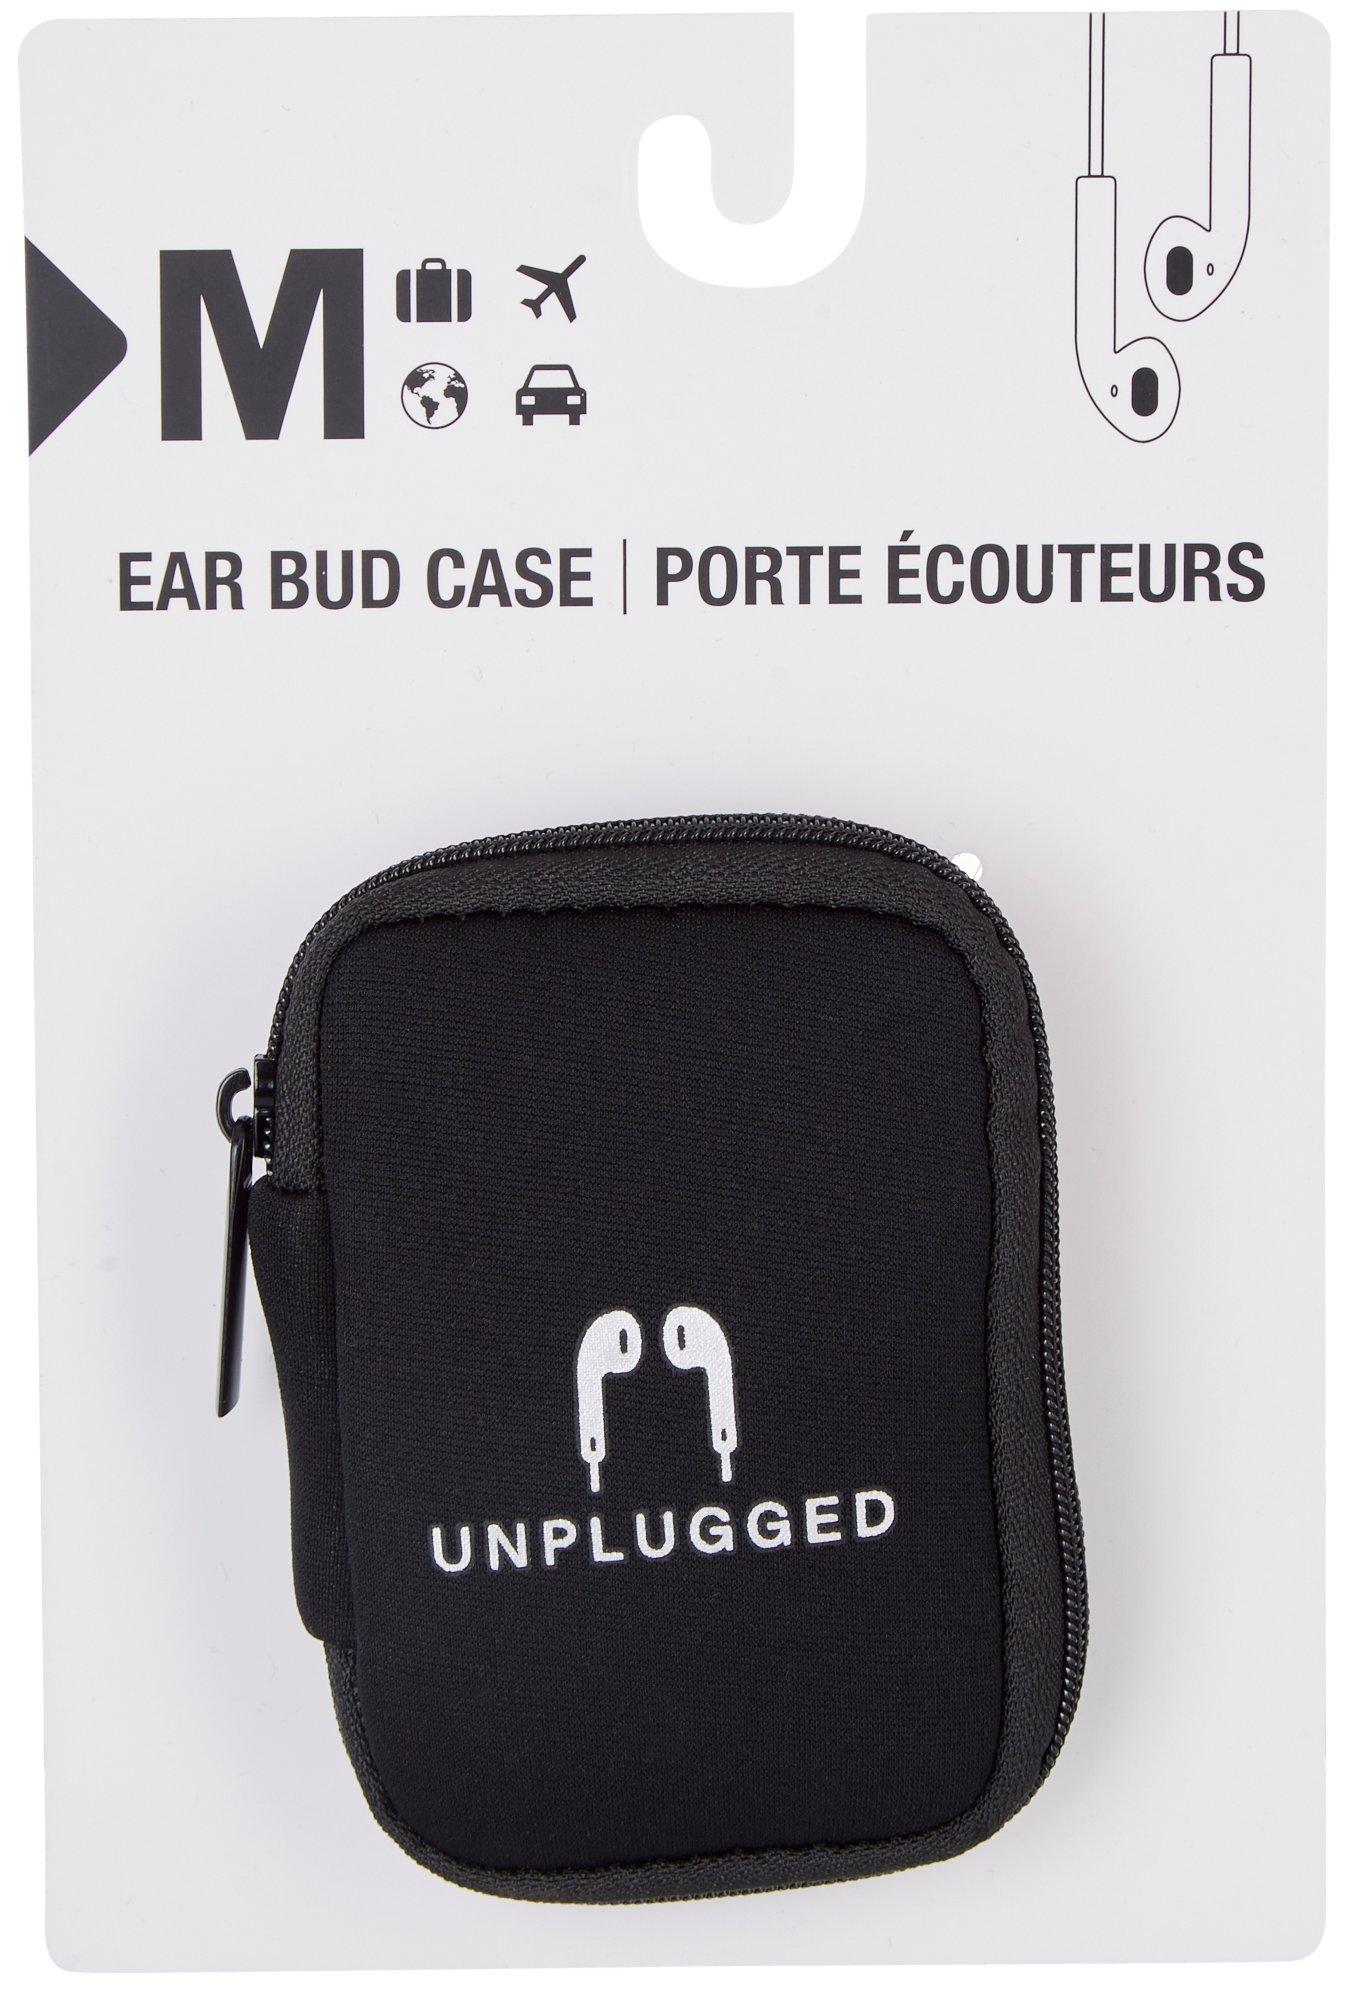 My Tagalongs Zip Around Neoprene Ear Bud Case